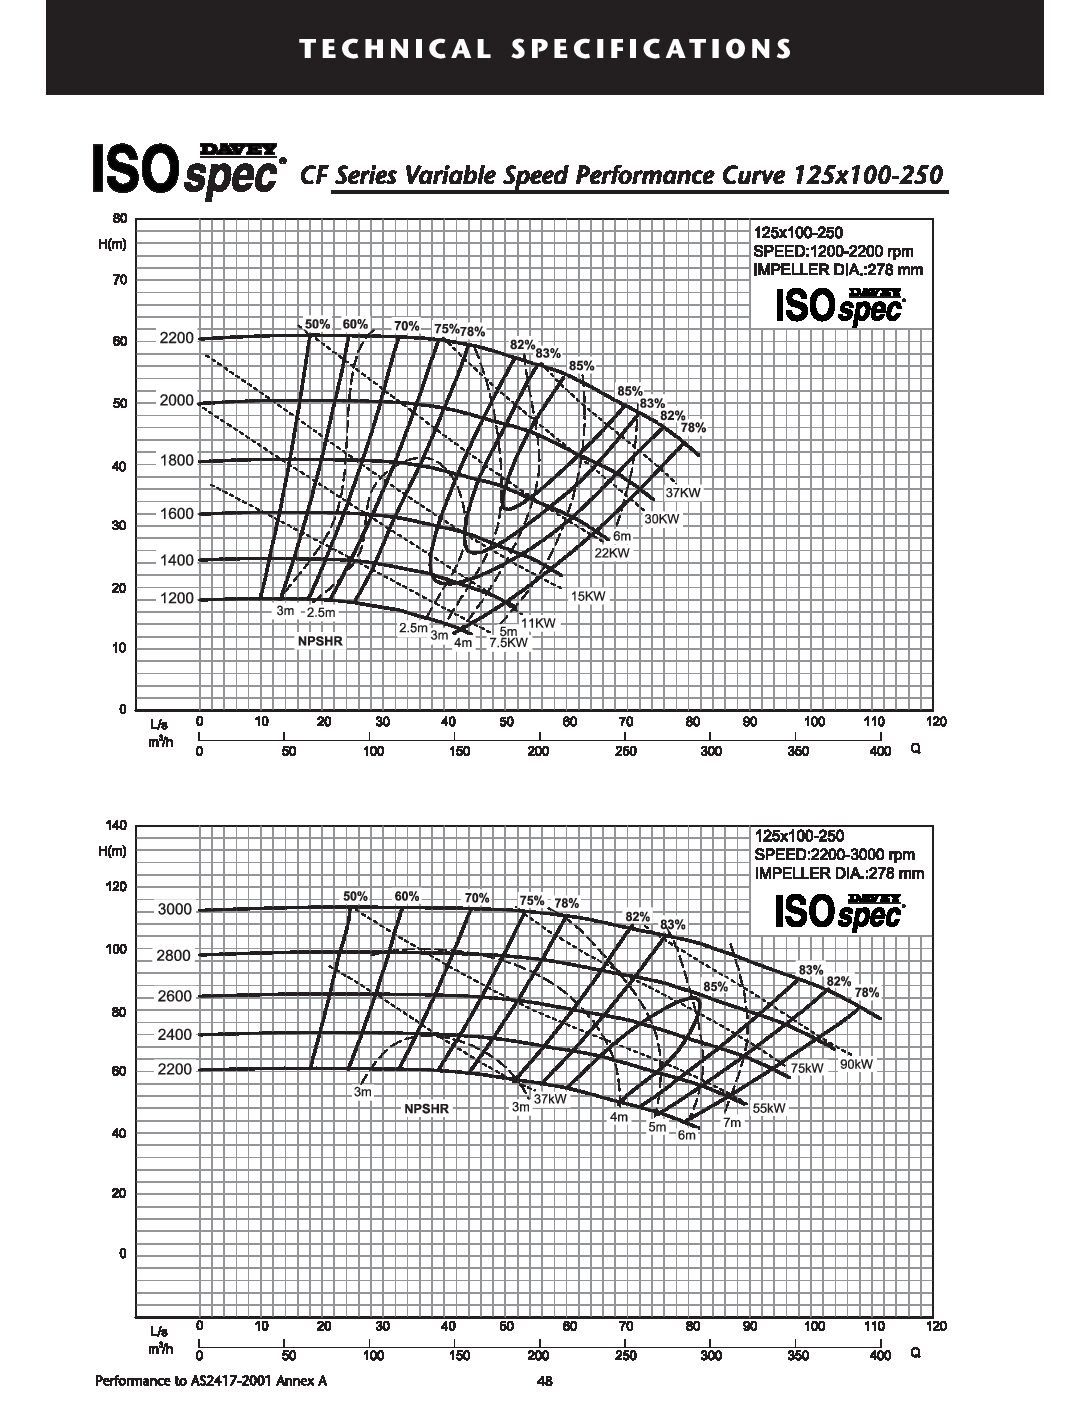 CF100-250 curve